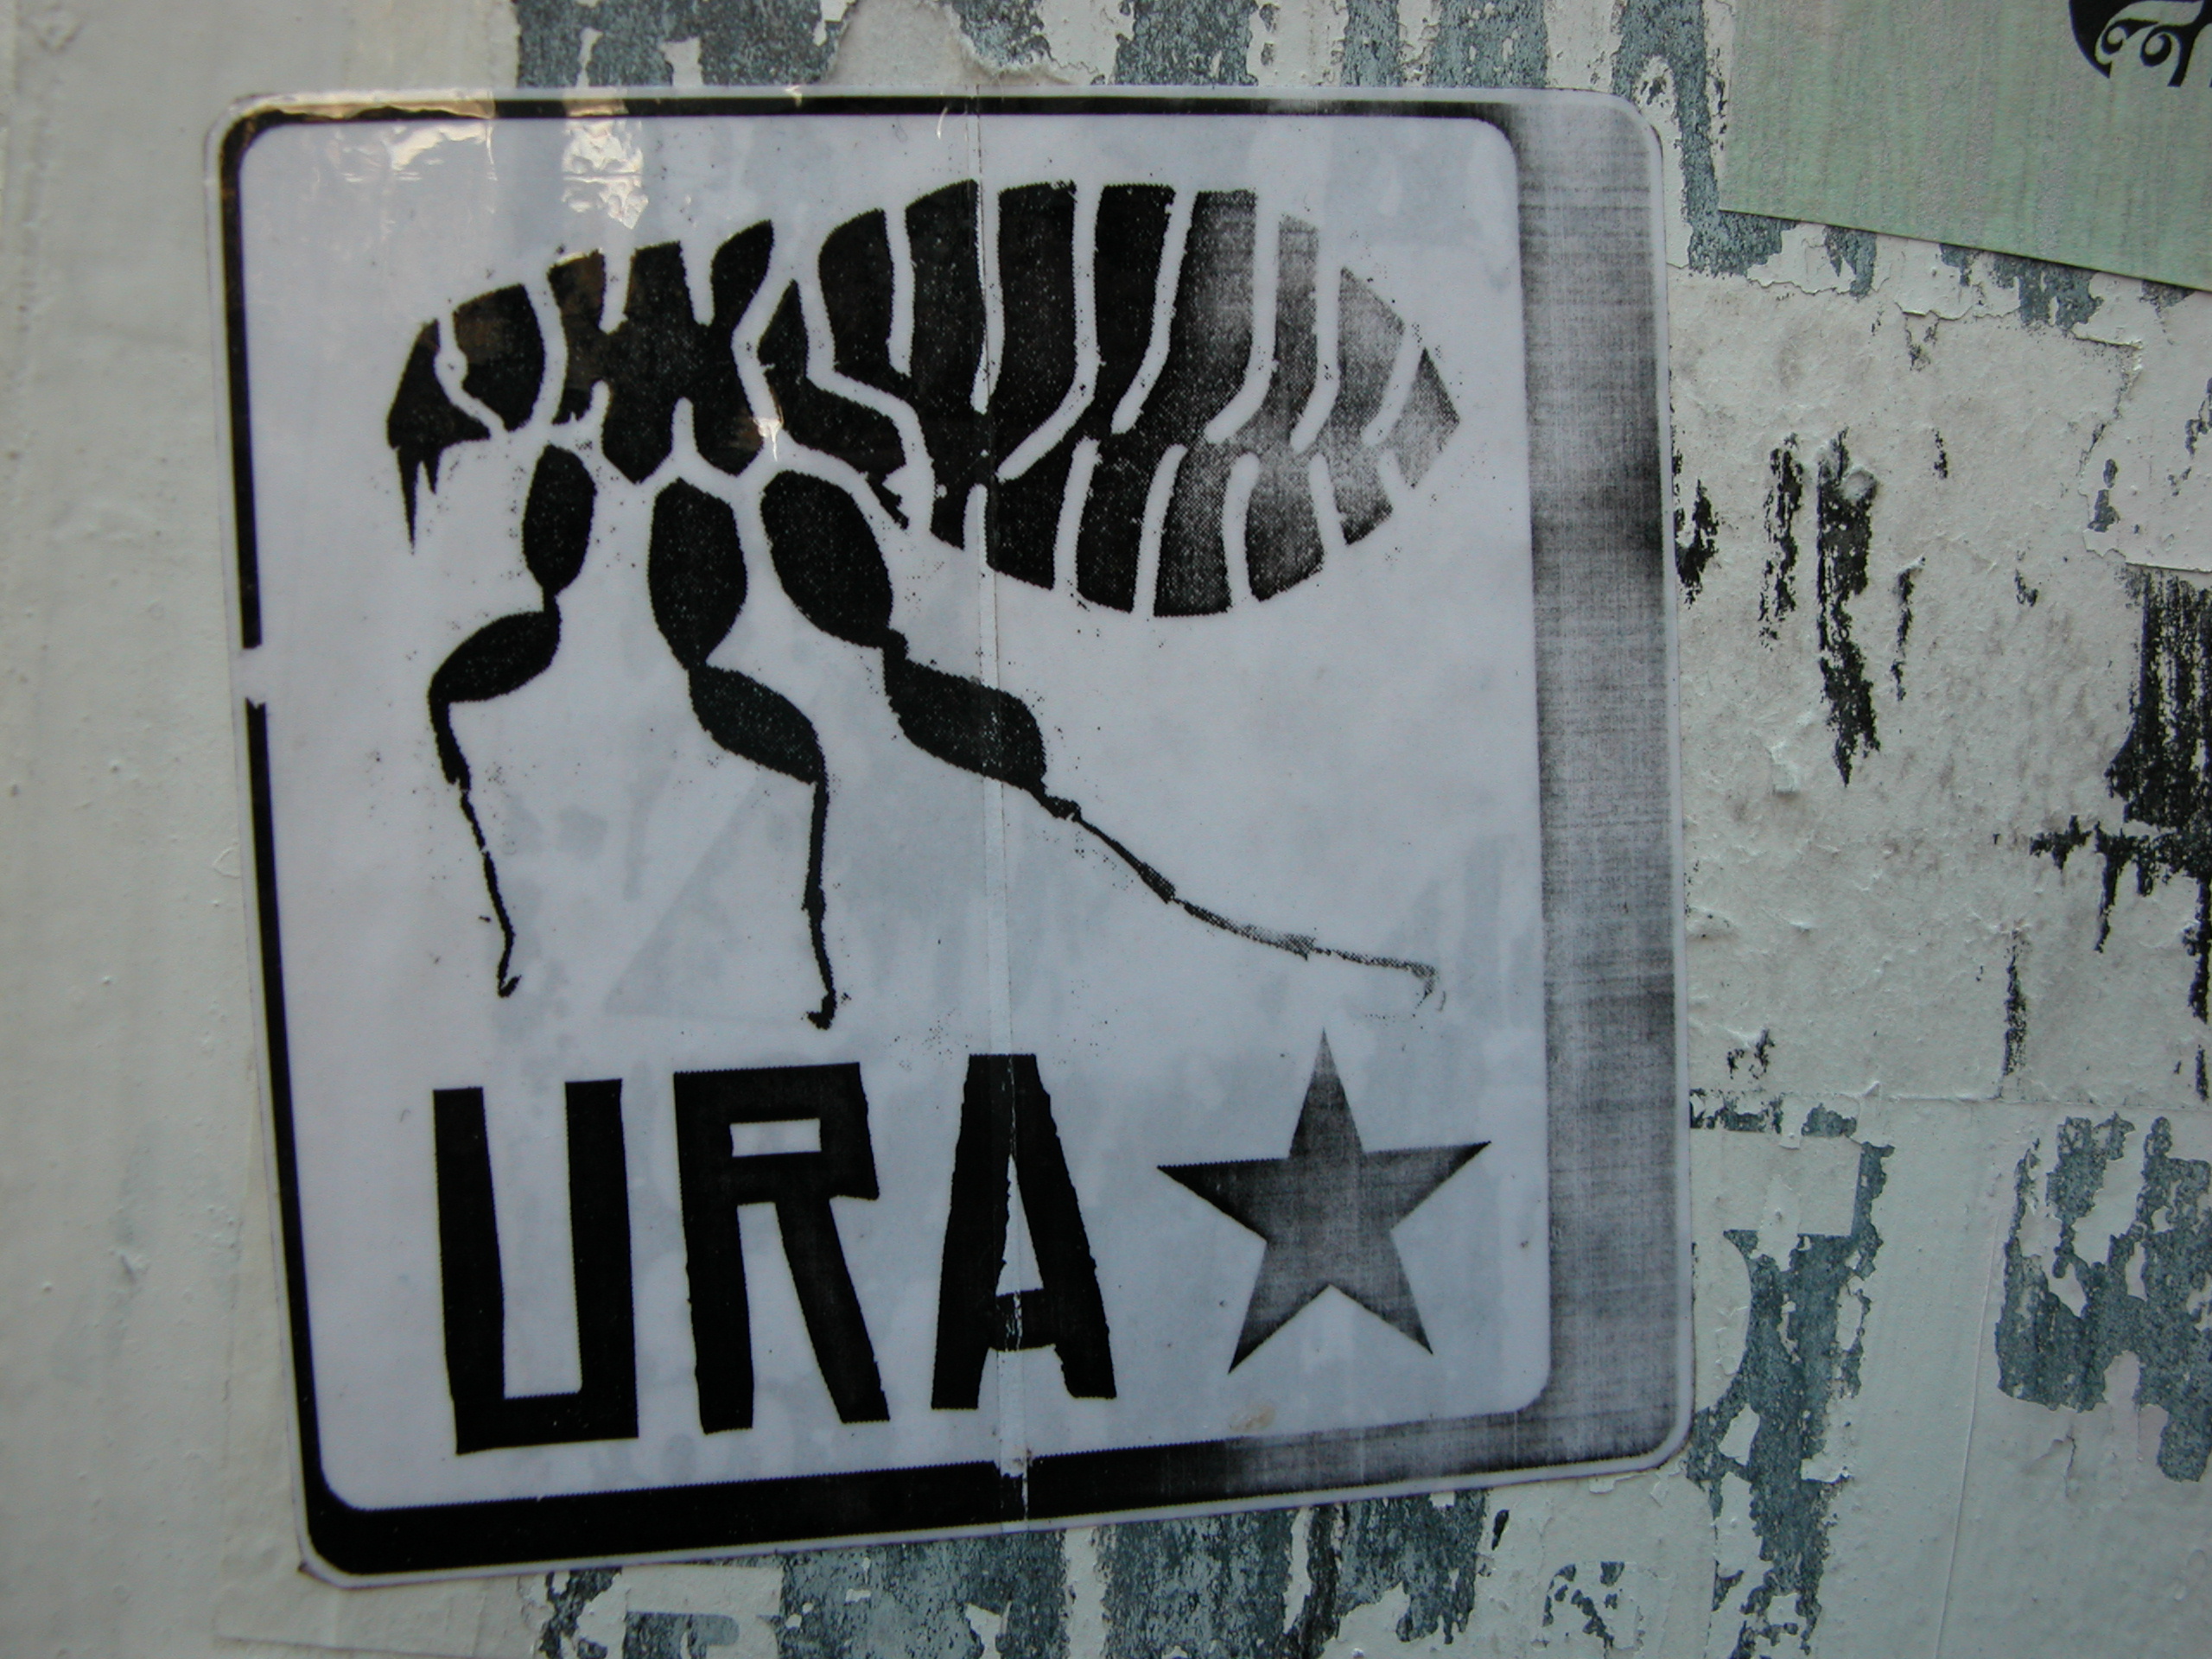 flea black ura rebels resistance star sign wall plaque black and white